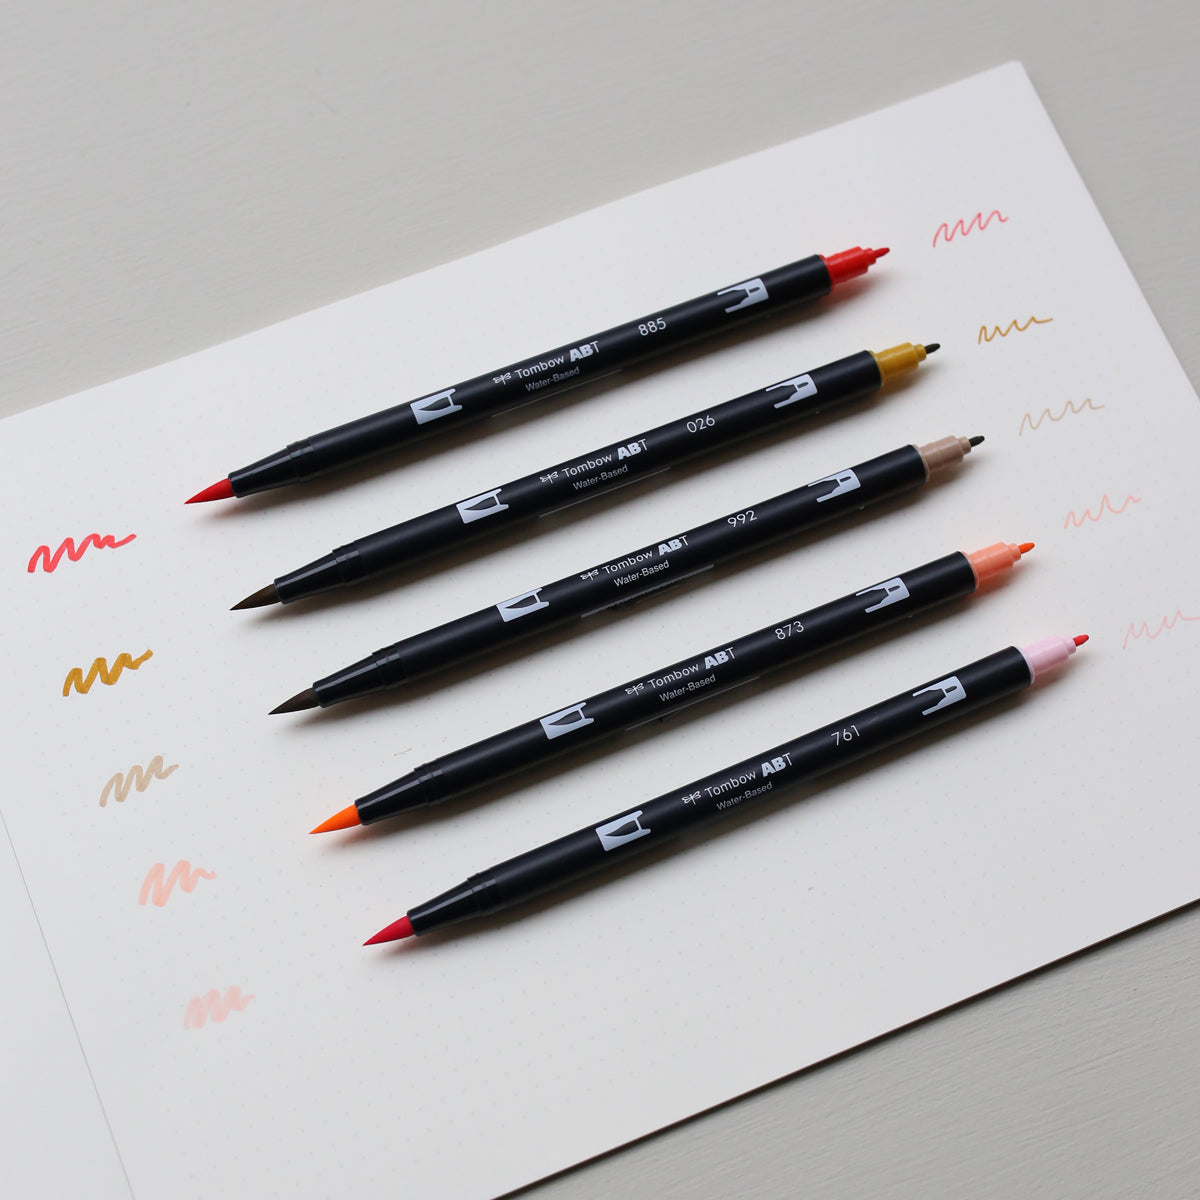 Tombow Dual Brush Pen Review + Blending Tutorial